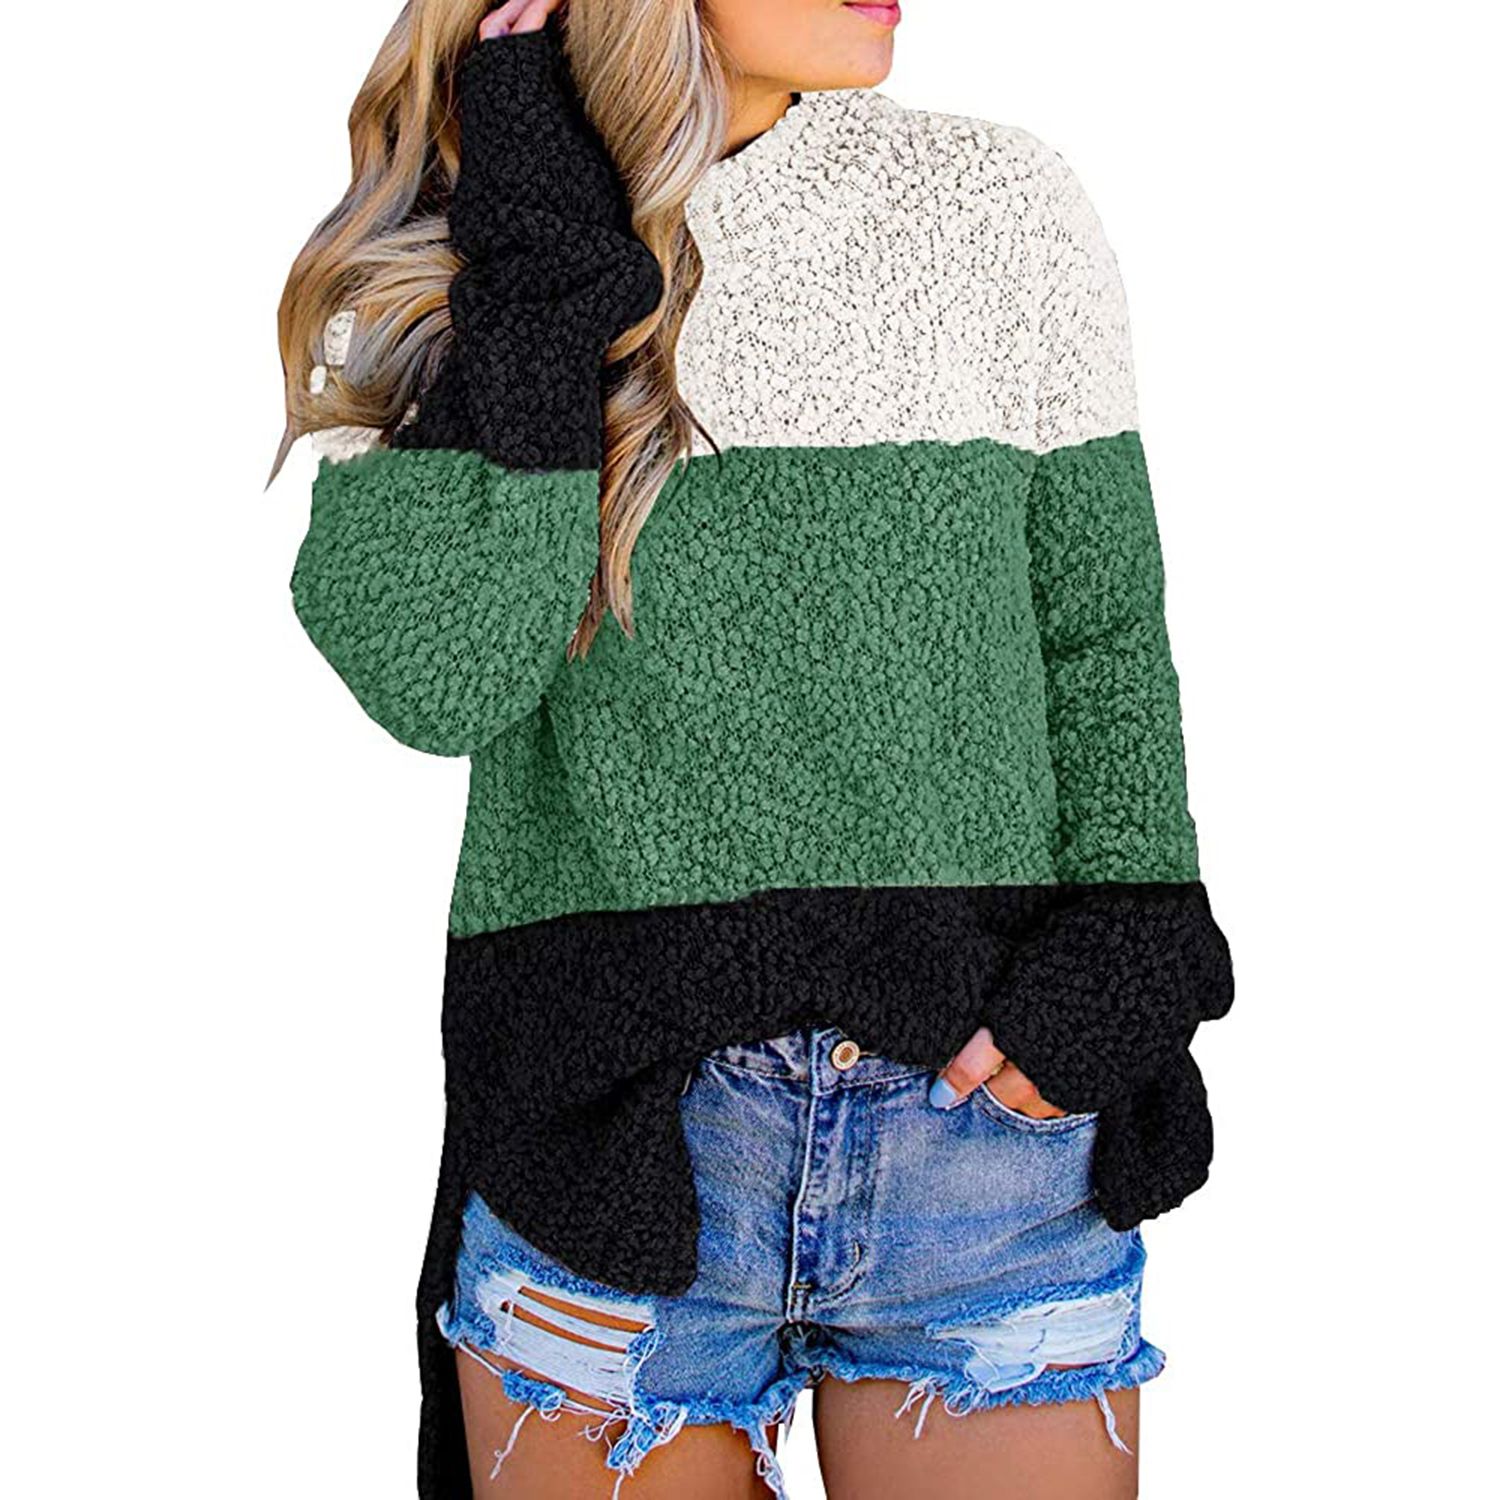 Imily Bela Wuzzy Knitted Sweater Sherpa Fleece باللون الأبيض والأخضر والأسود